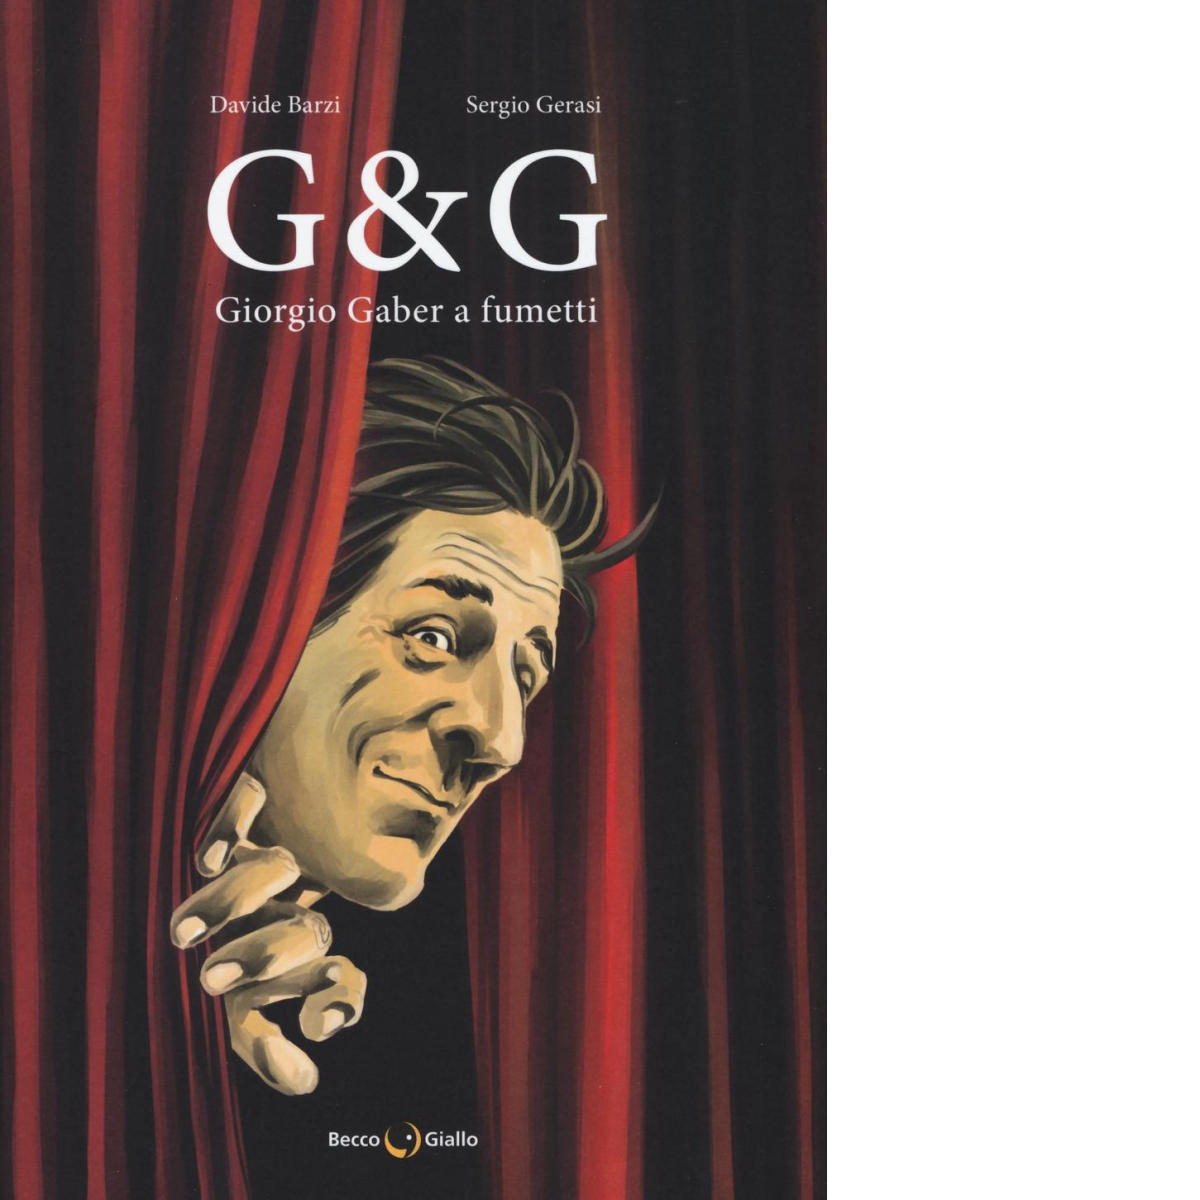 G & G. Giorgio Gaber a fumetti di Davide Barzi, Sergio Gerasi,  2016,  Becco Gia